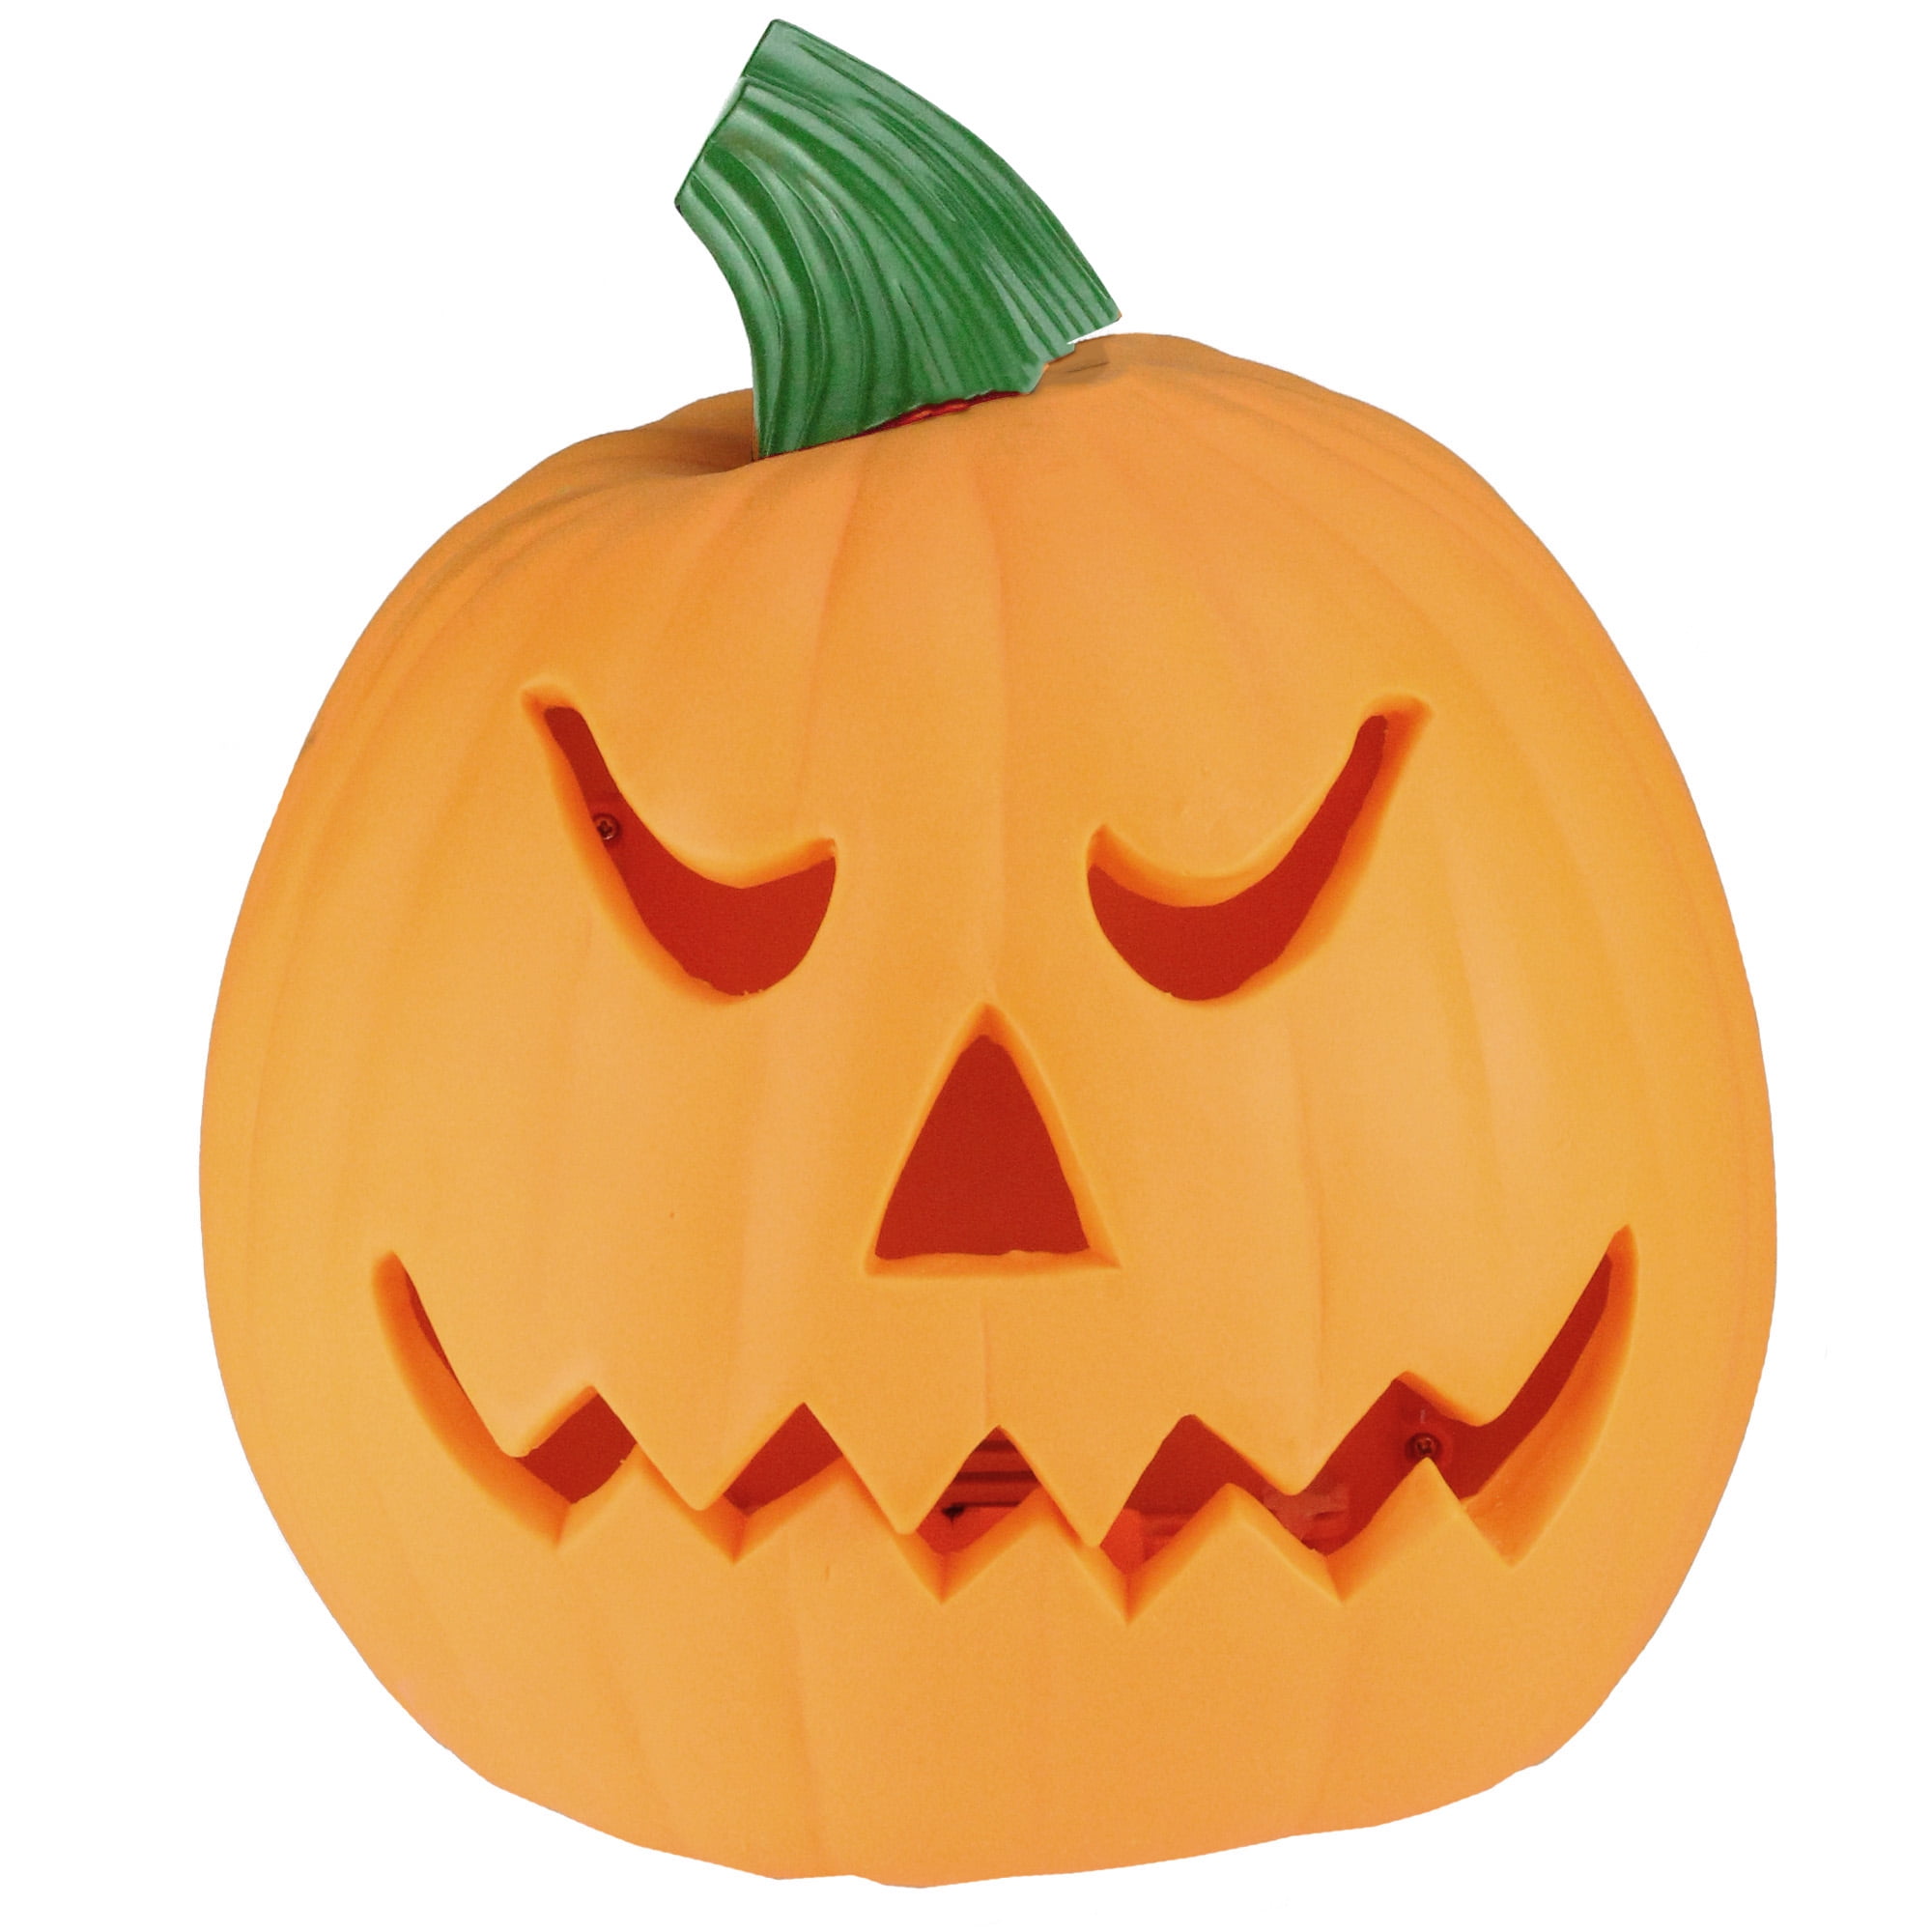 9.75" Orange and Green Animated Double-Sided Pumpkin Halloween Decor 